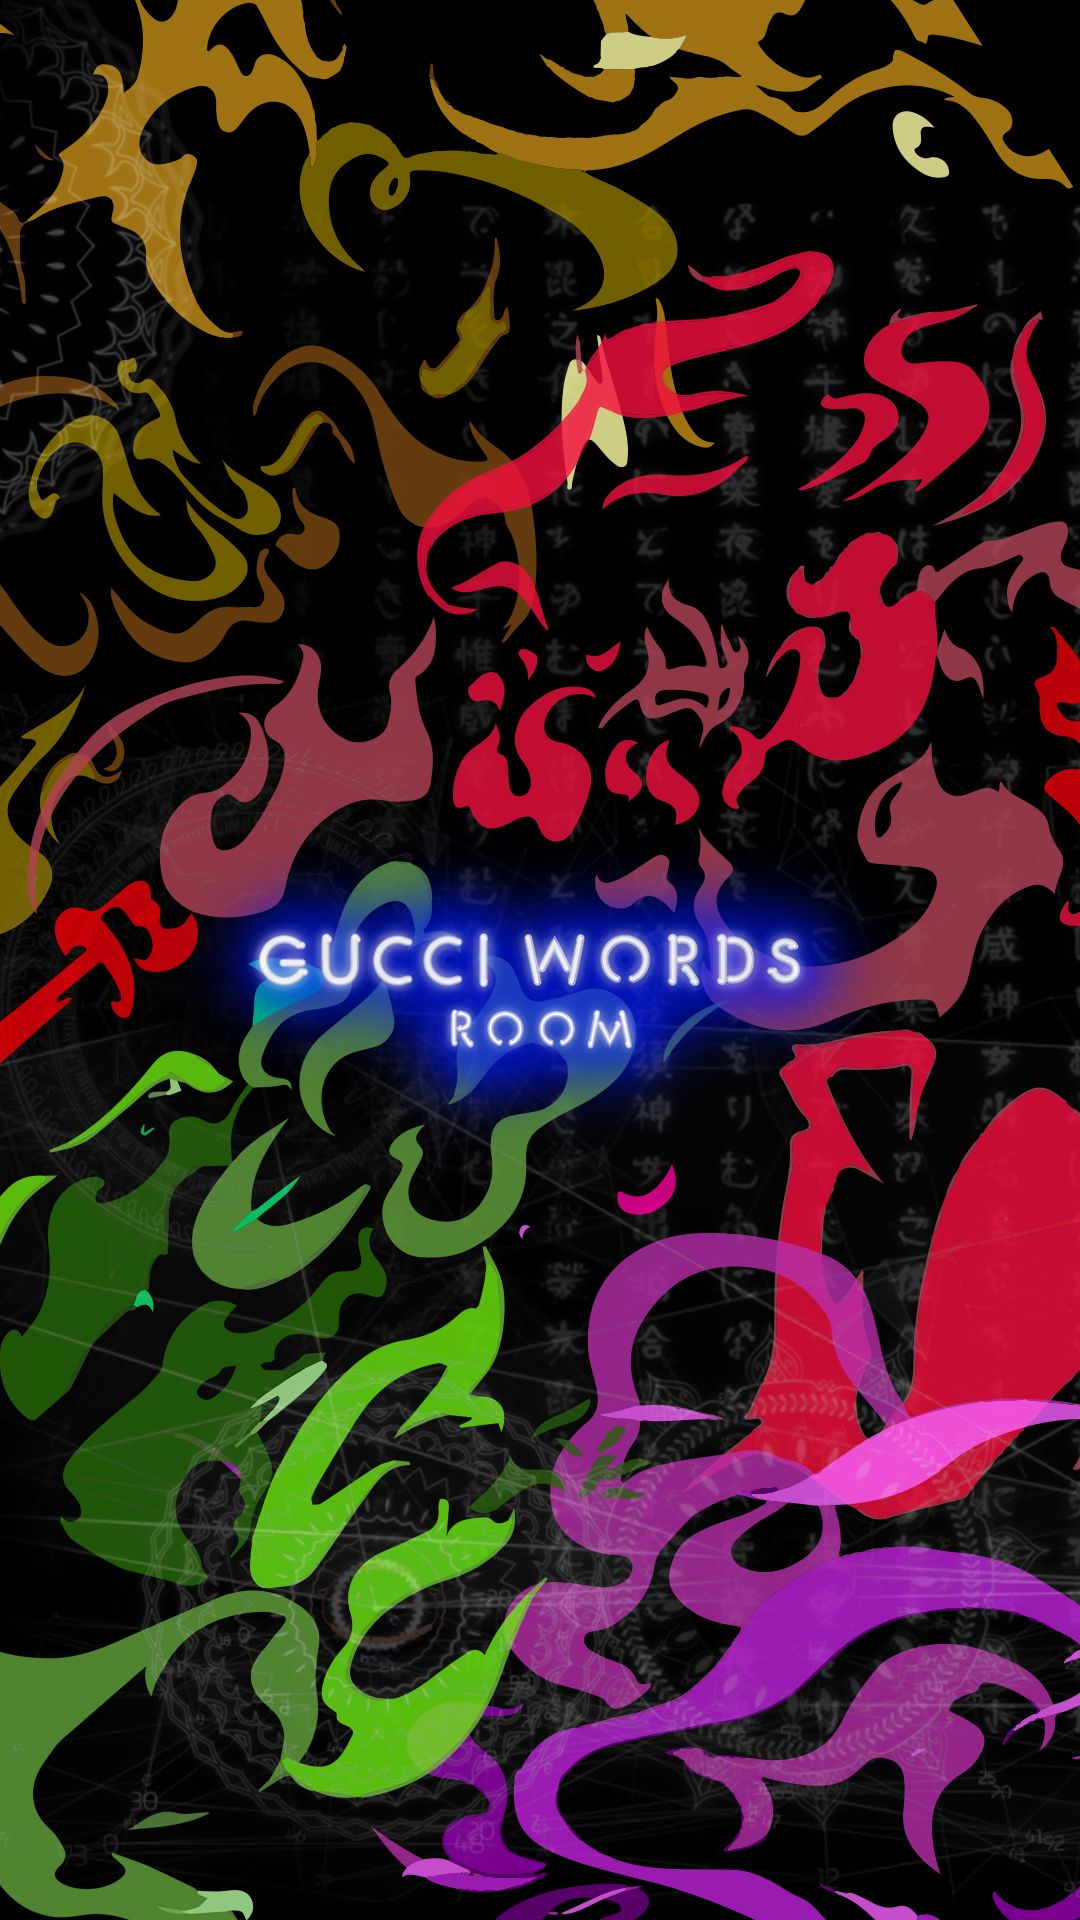 Gucci 4 Rooms Fondos de pantalla | Sitio oficial de Gucci Estados Unidos